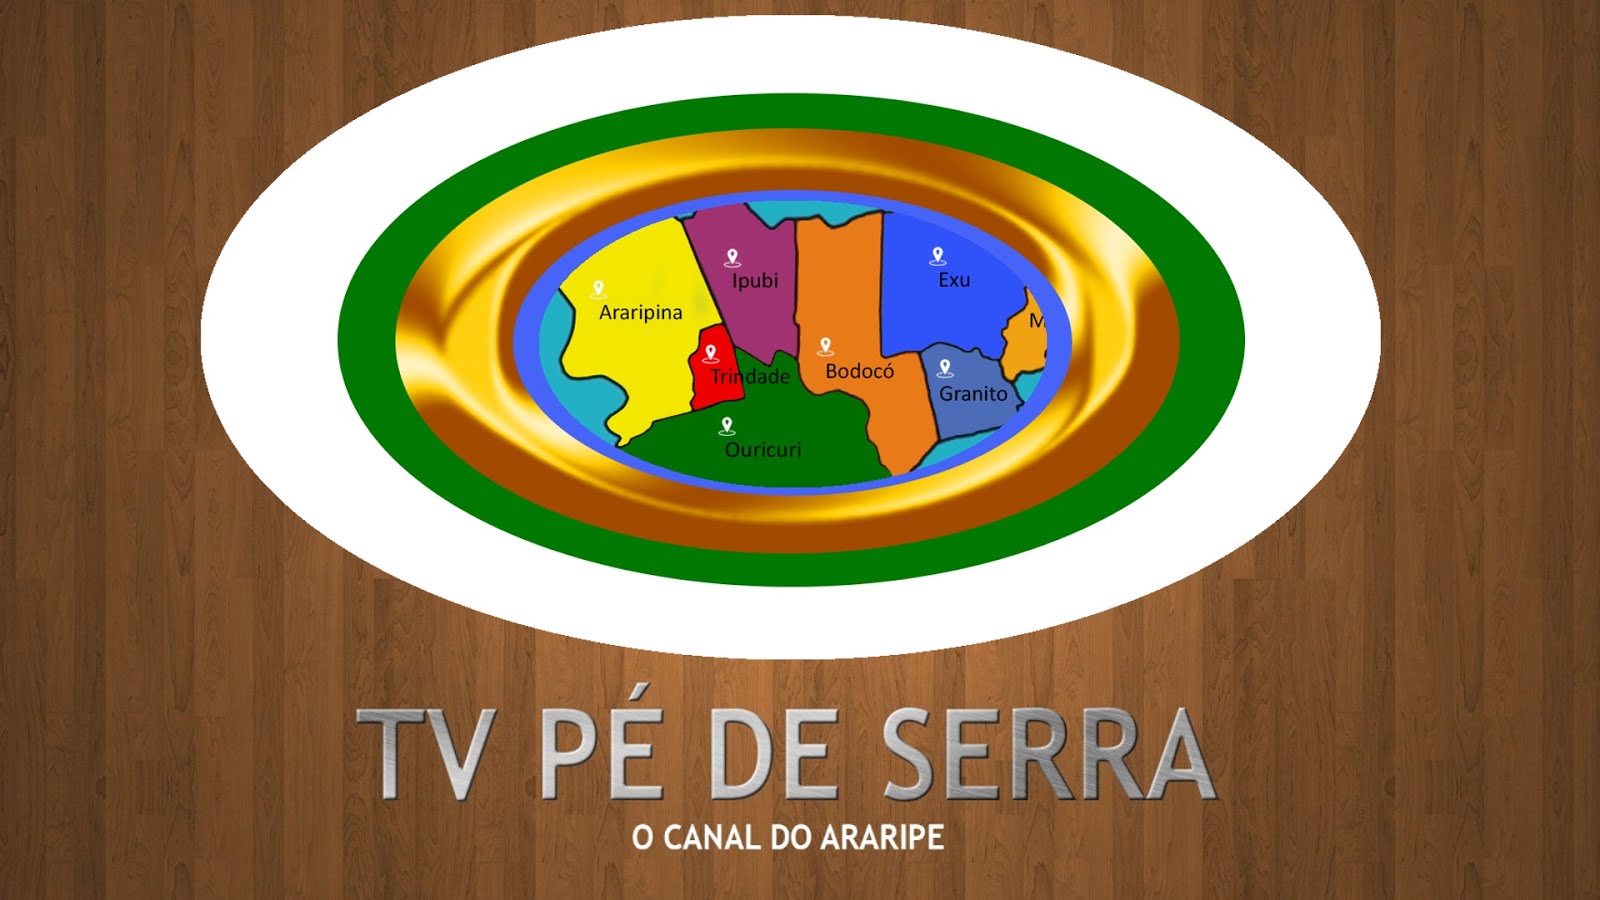 TV PÉ DE SERRA